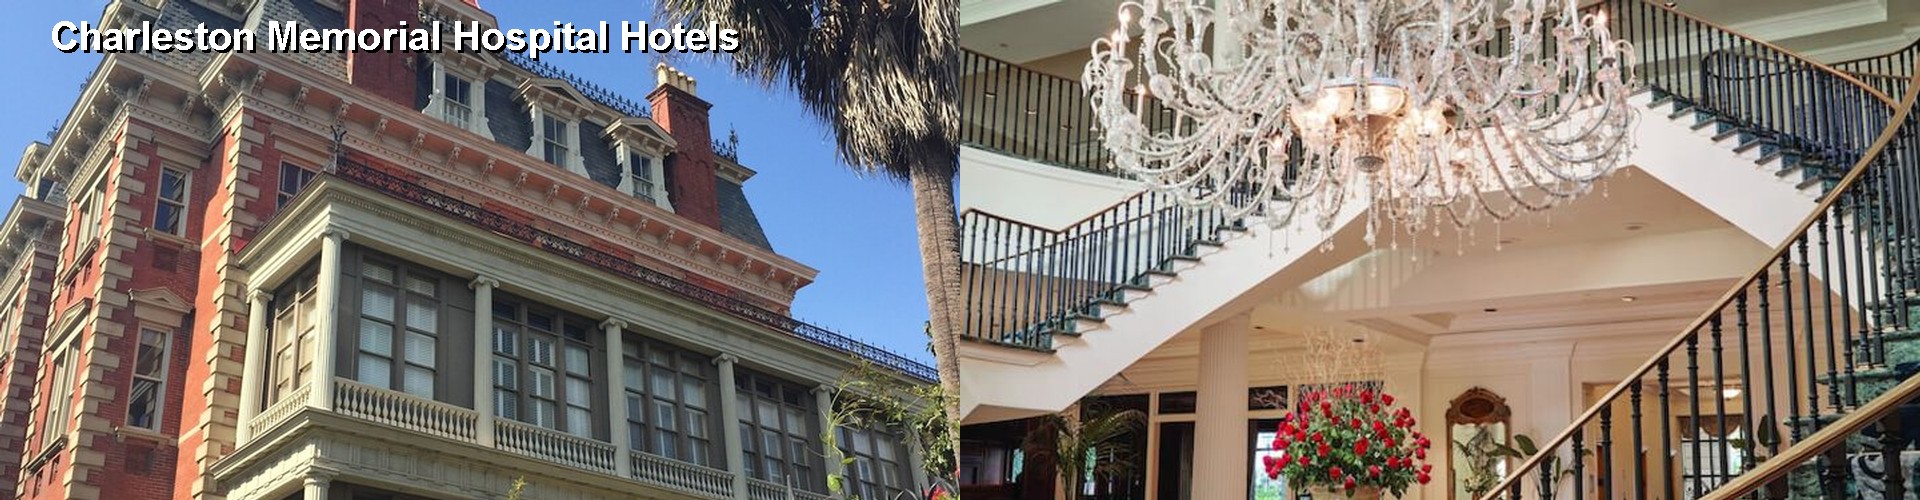 5 Best Hotels near Charleston Memorial Hospital